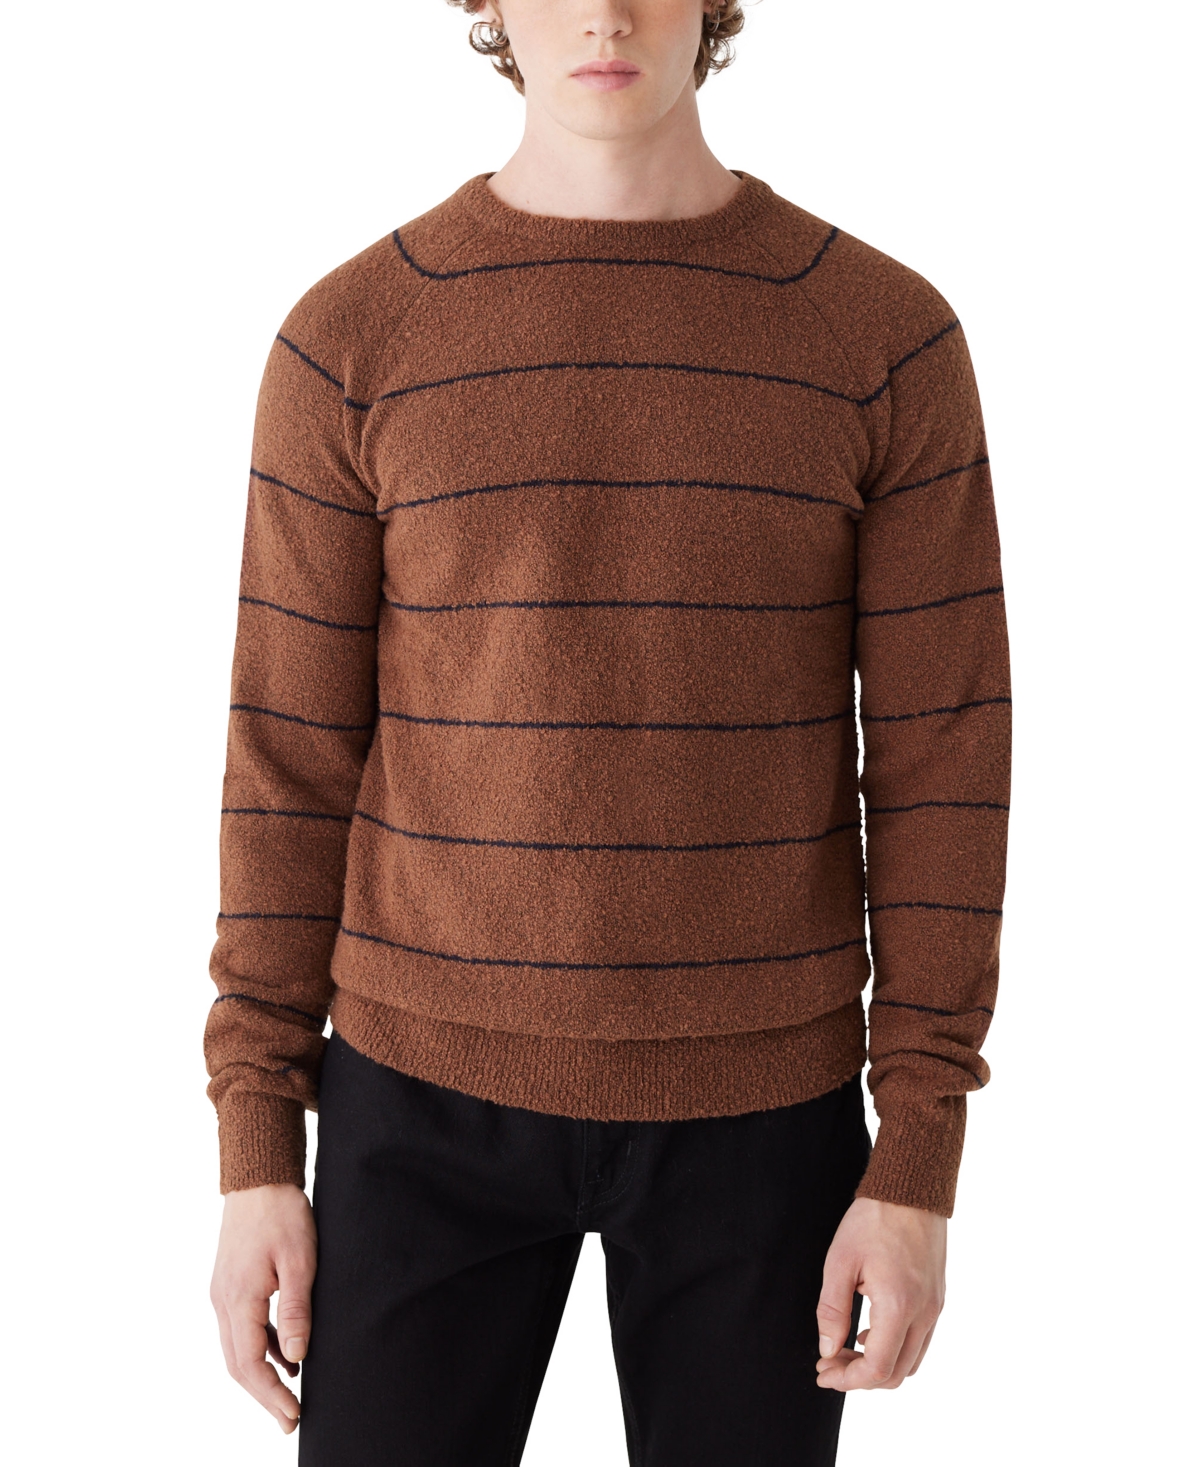 Men's Striped Crewneck Long Sleeve Sweater - Cappuccino